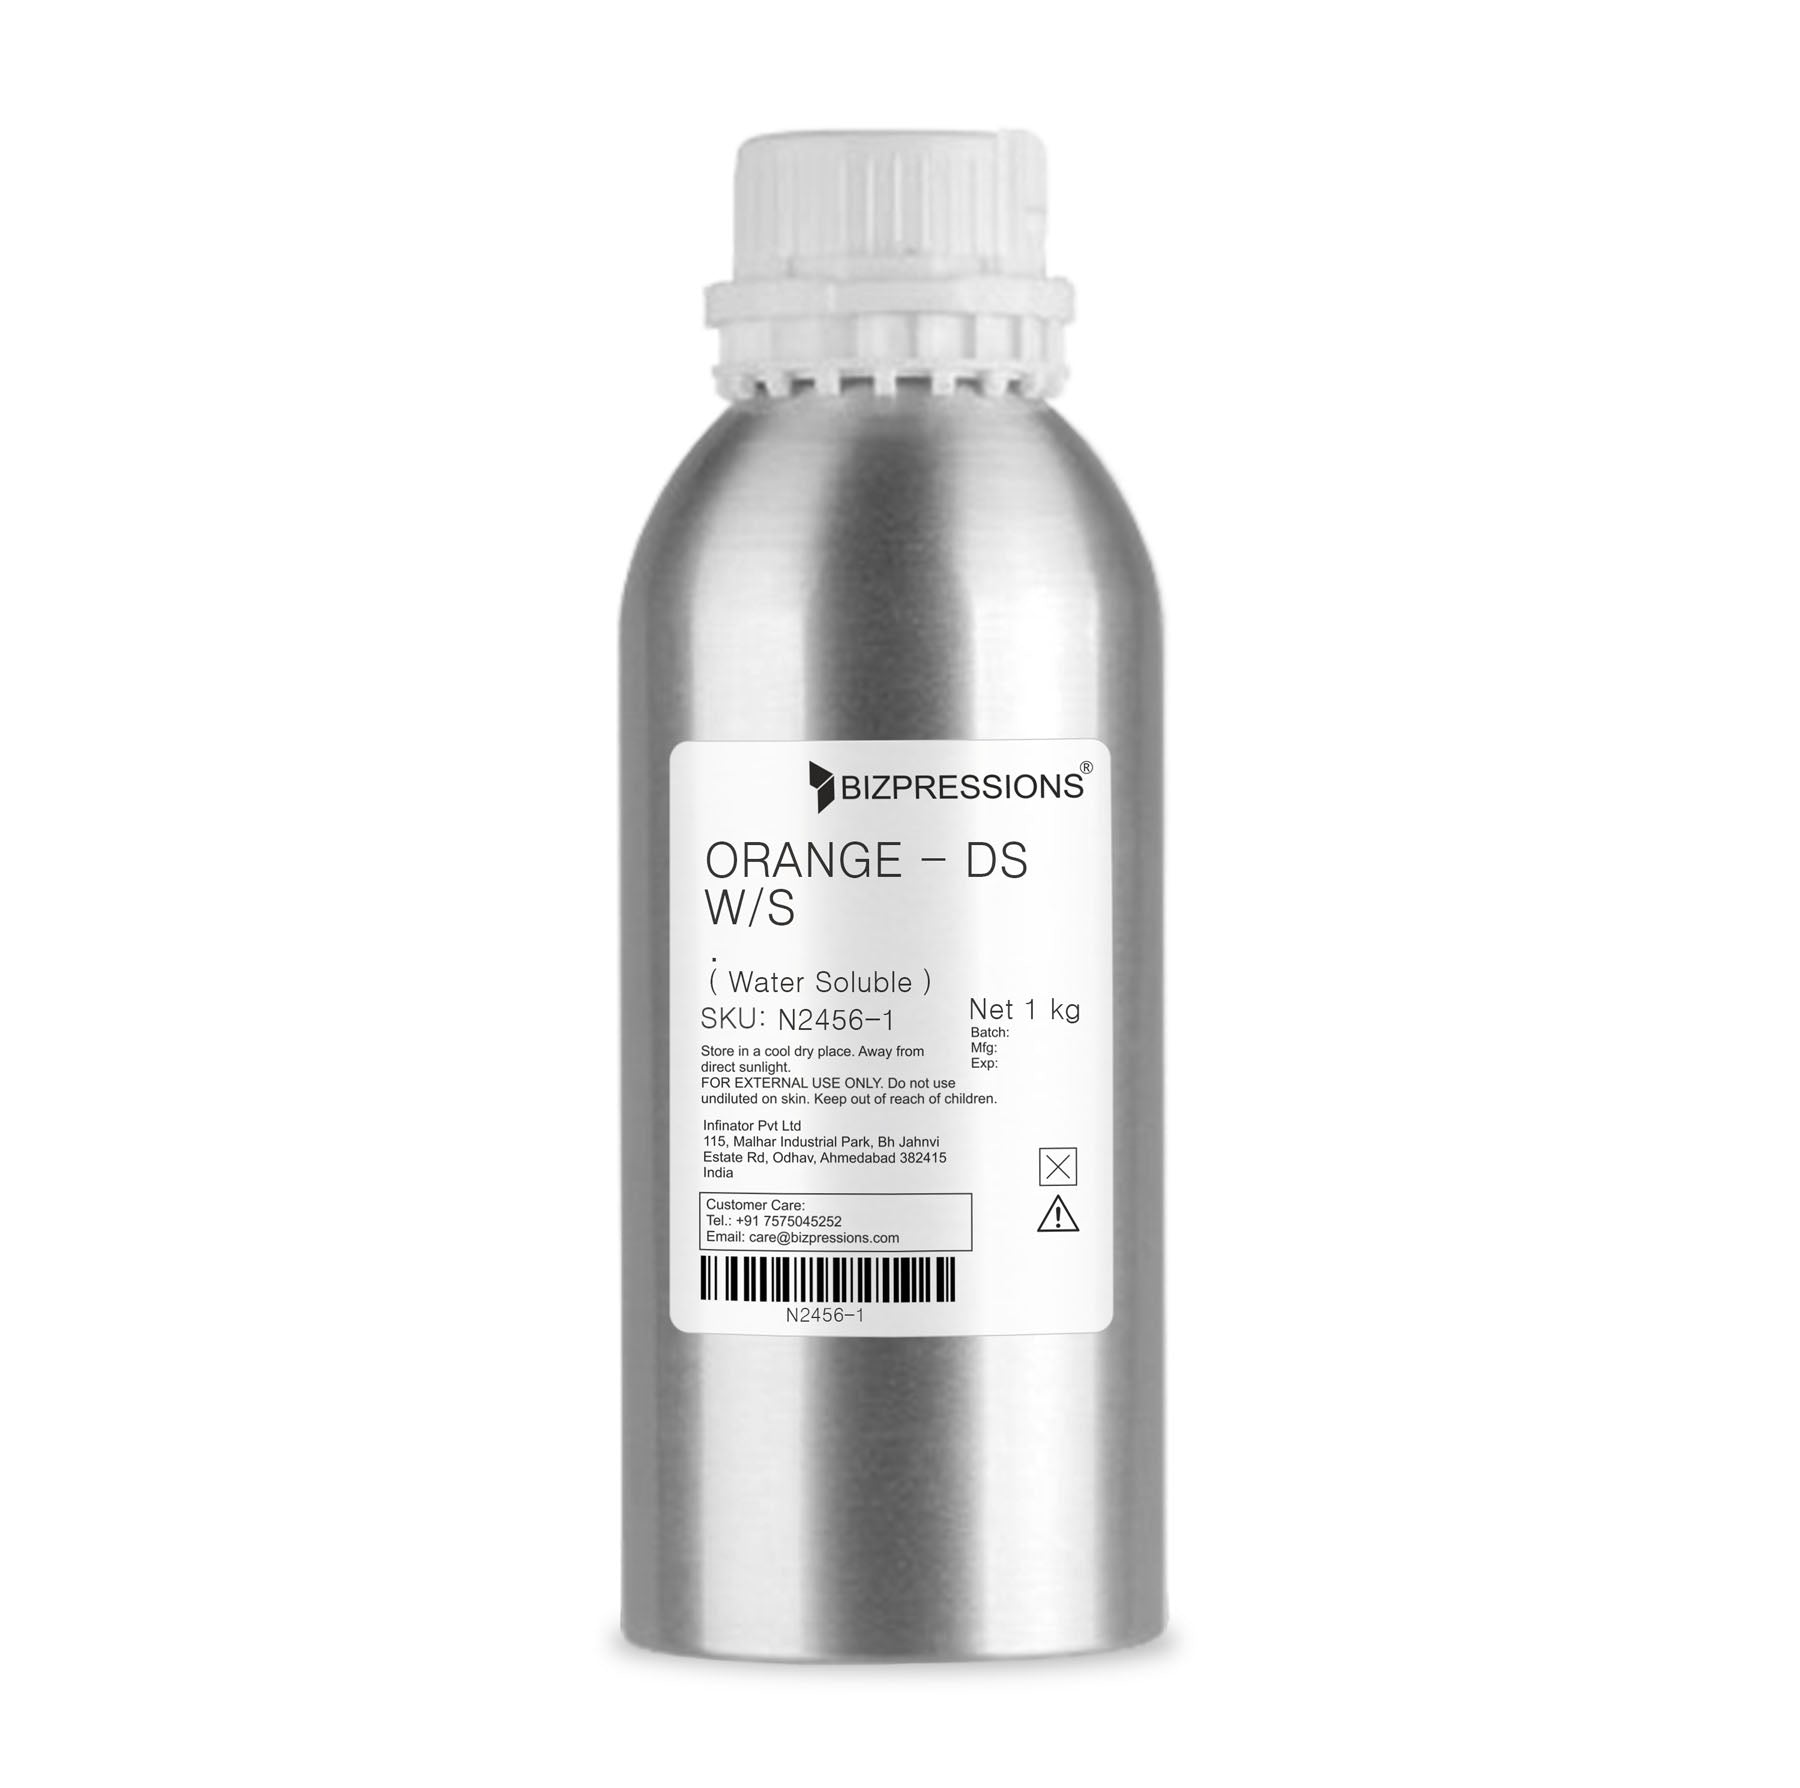 ORANGE - DS W/S - Fragrance ( Water Soluble ) - 1 kg